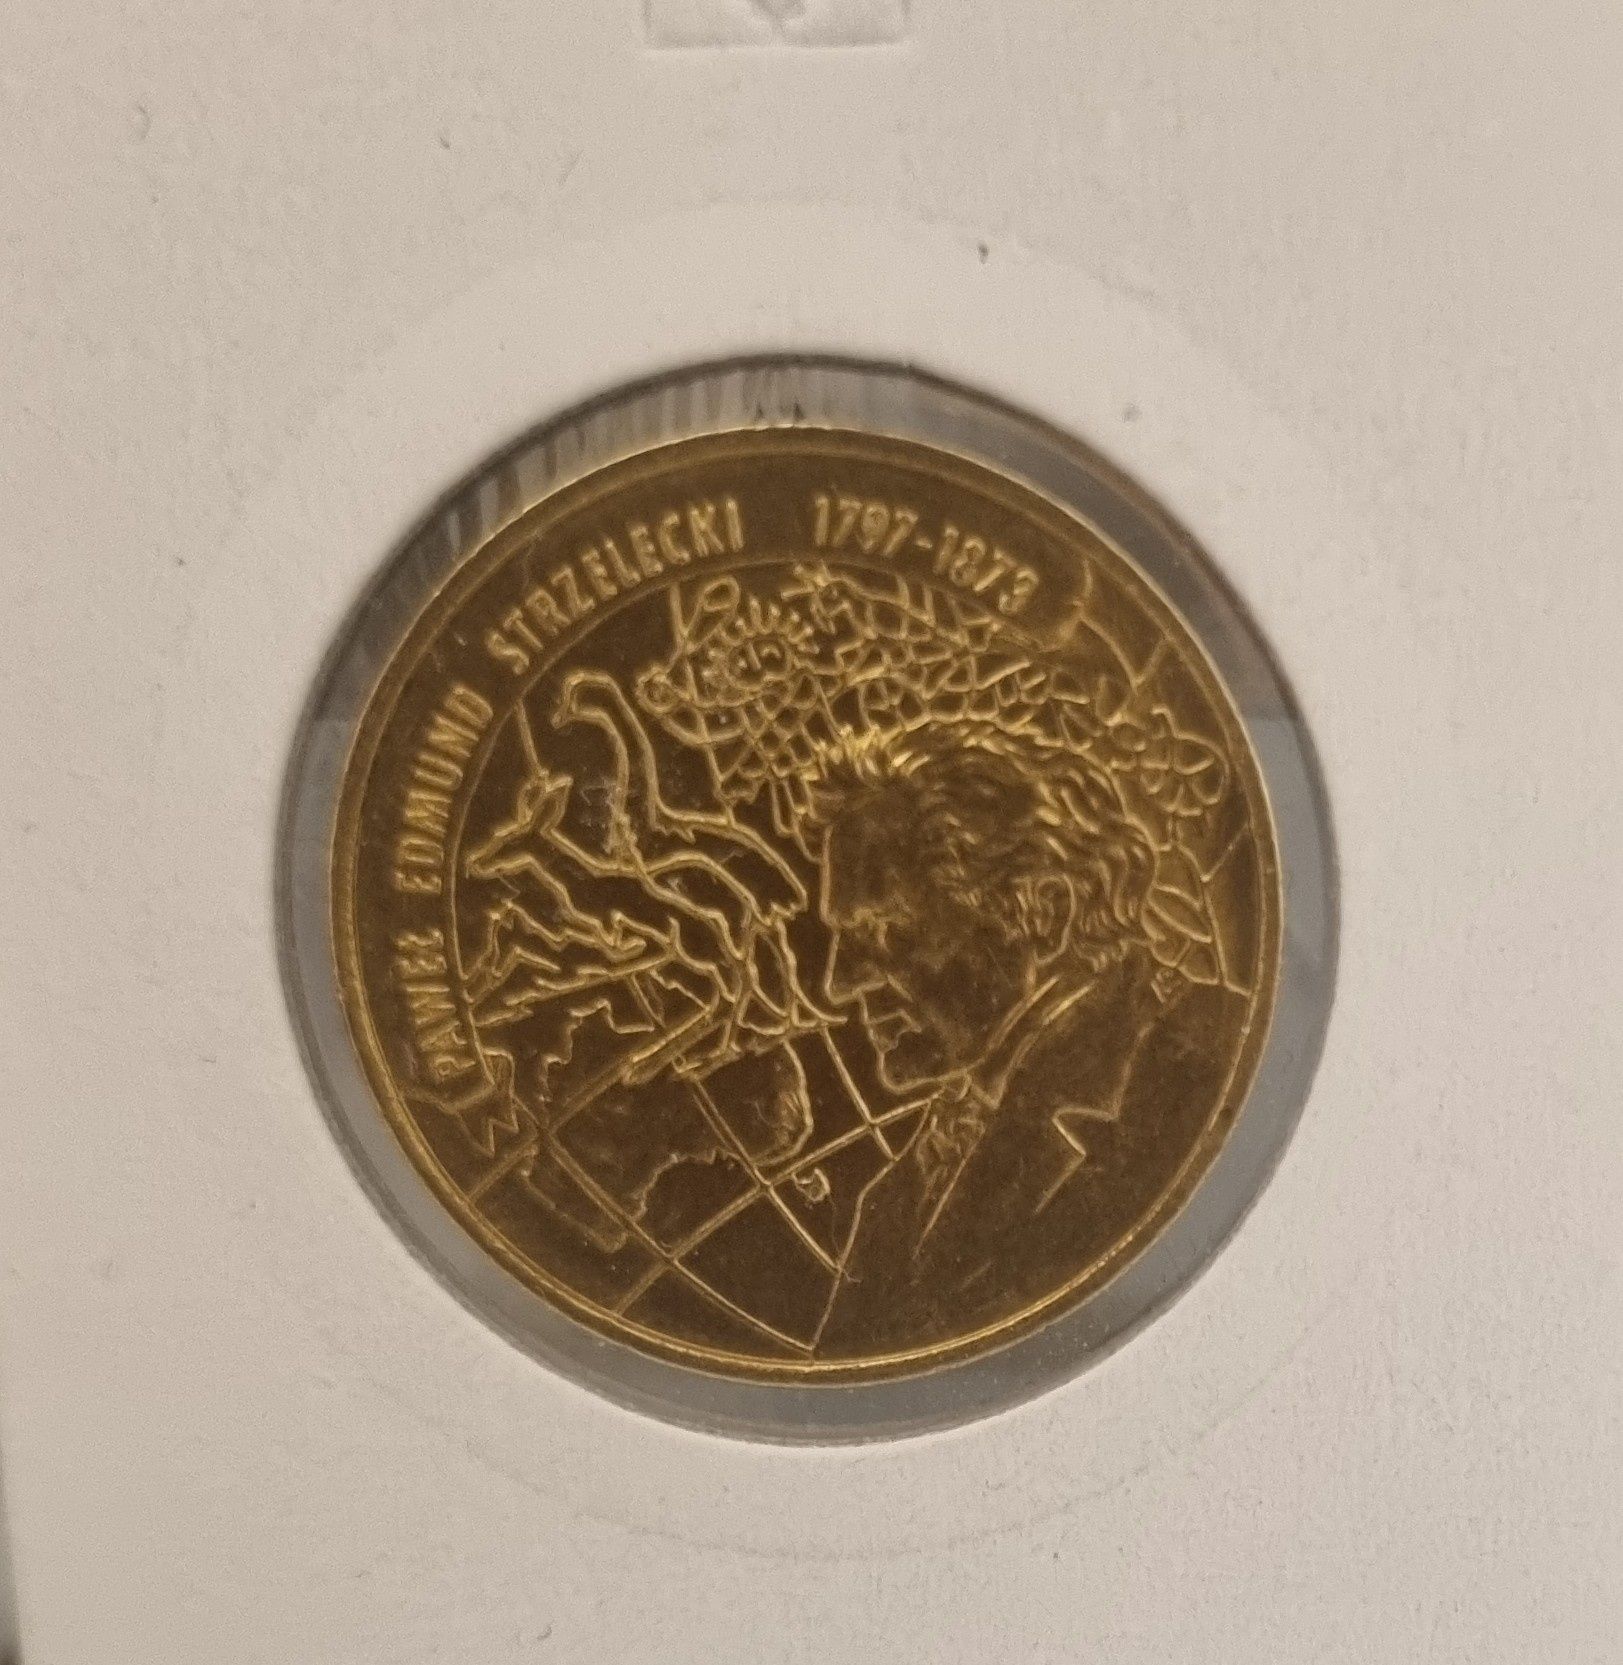 Stare monety / moneta 2 zł NG 1997 r. Strzelecki